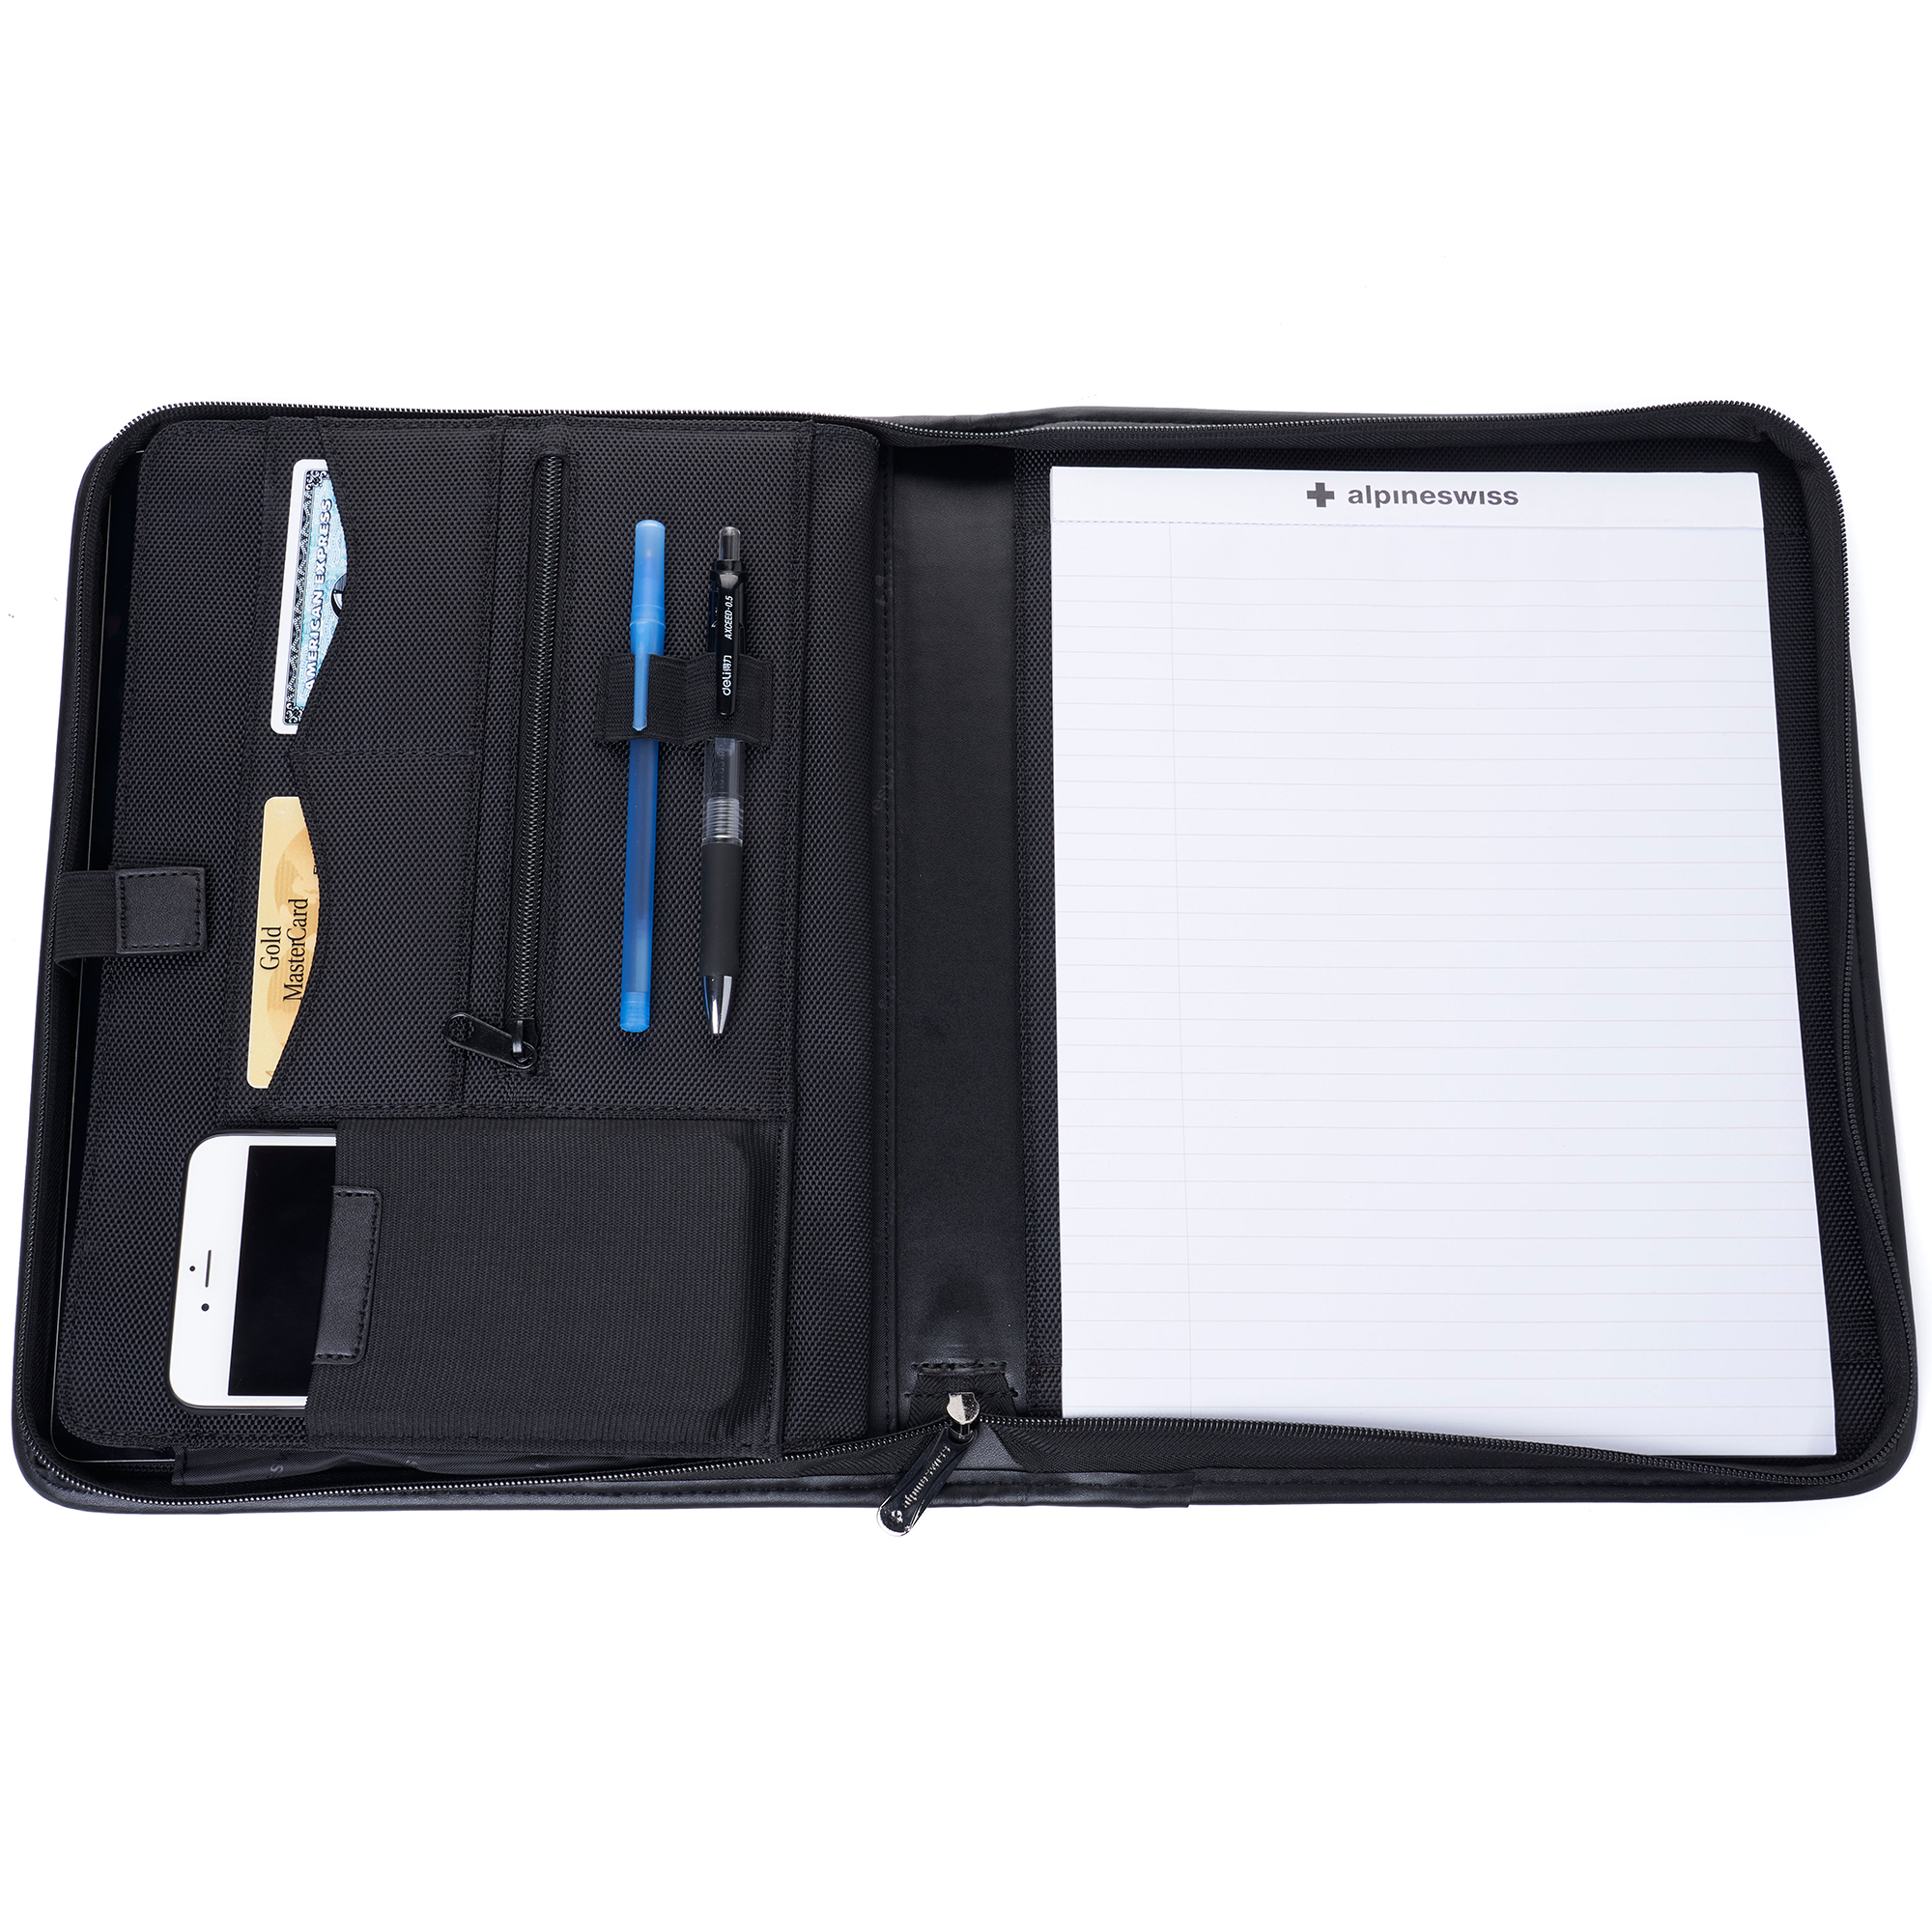 Padfolio Portfolio Resume Folder with Pocket Premium Faux Leather Interview  Writing Legal Pads for Document Organizer Portfolio Card Holder Black